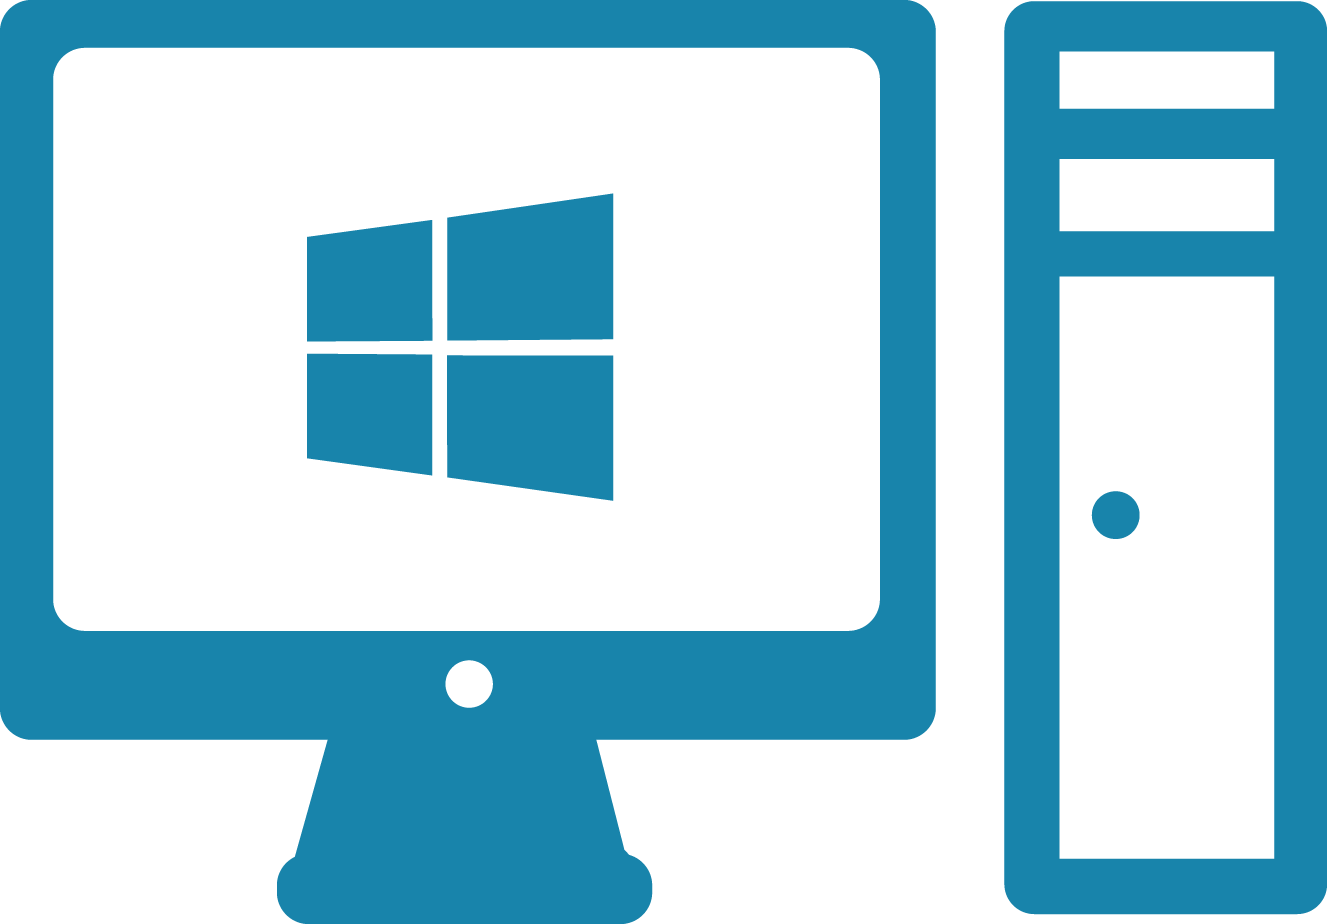 Windows 8 Computer Icon